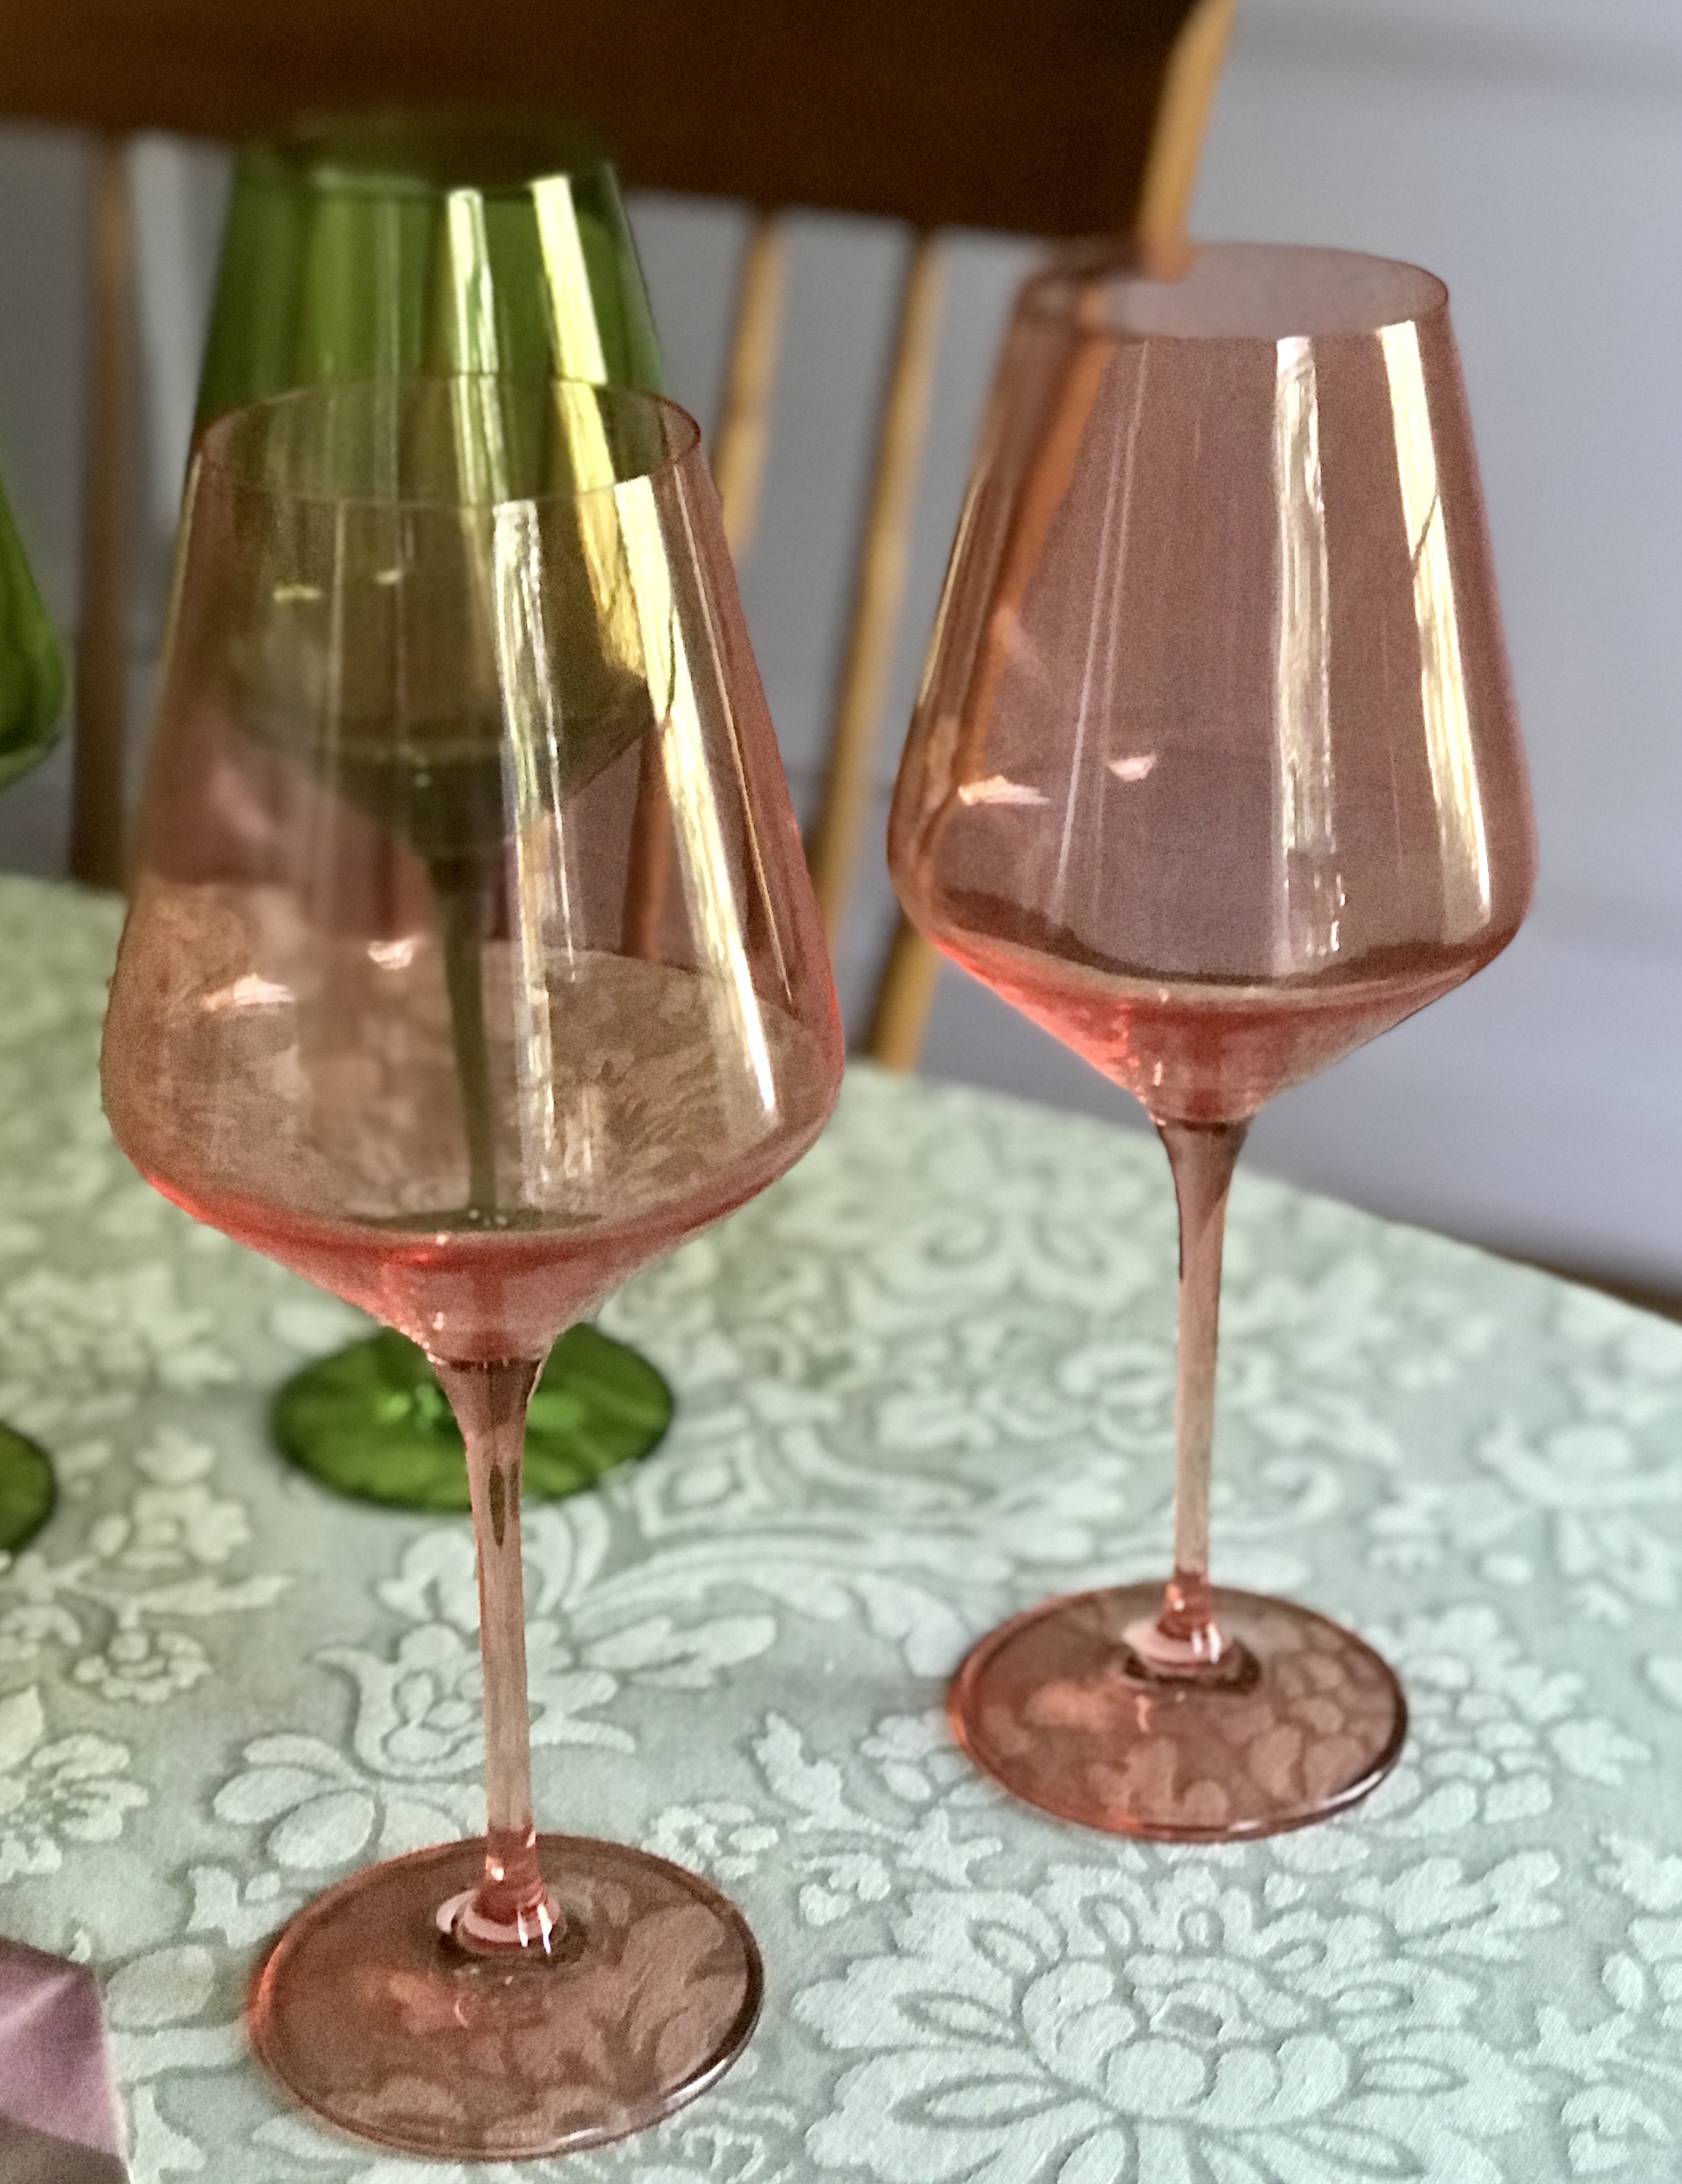 Estelle Colored Glass Hand-Blown Wine Glass 2-Piece Set - Blush